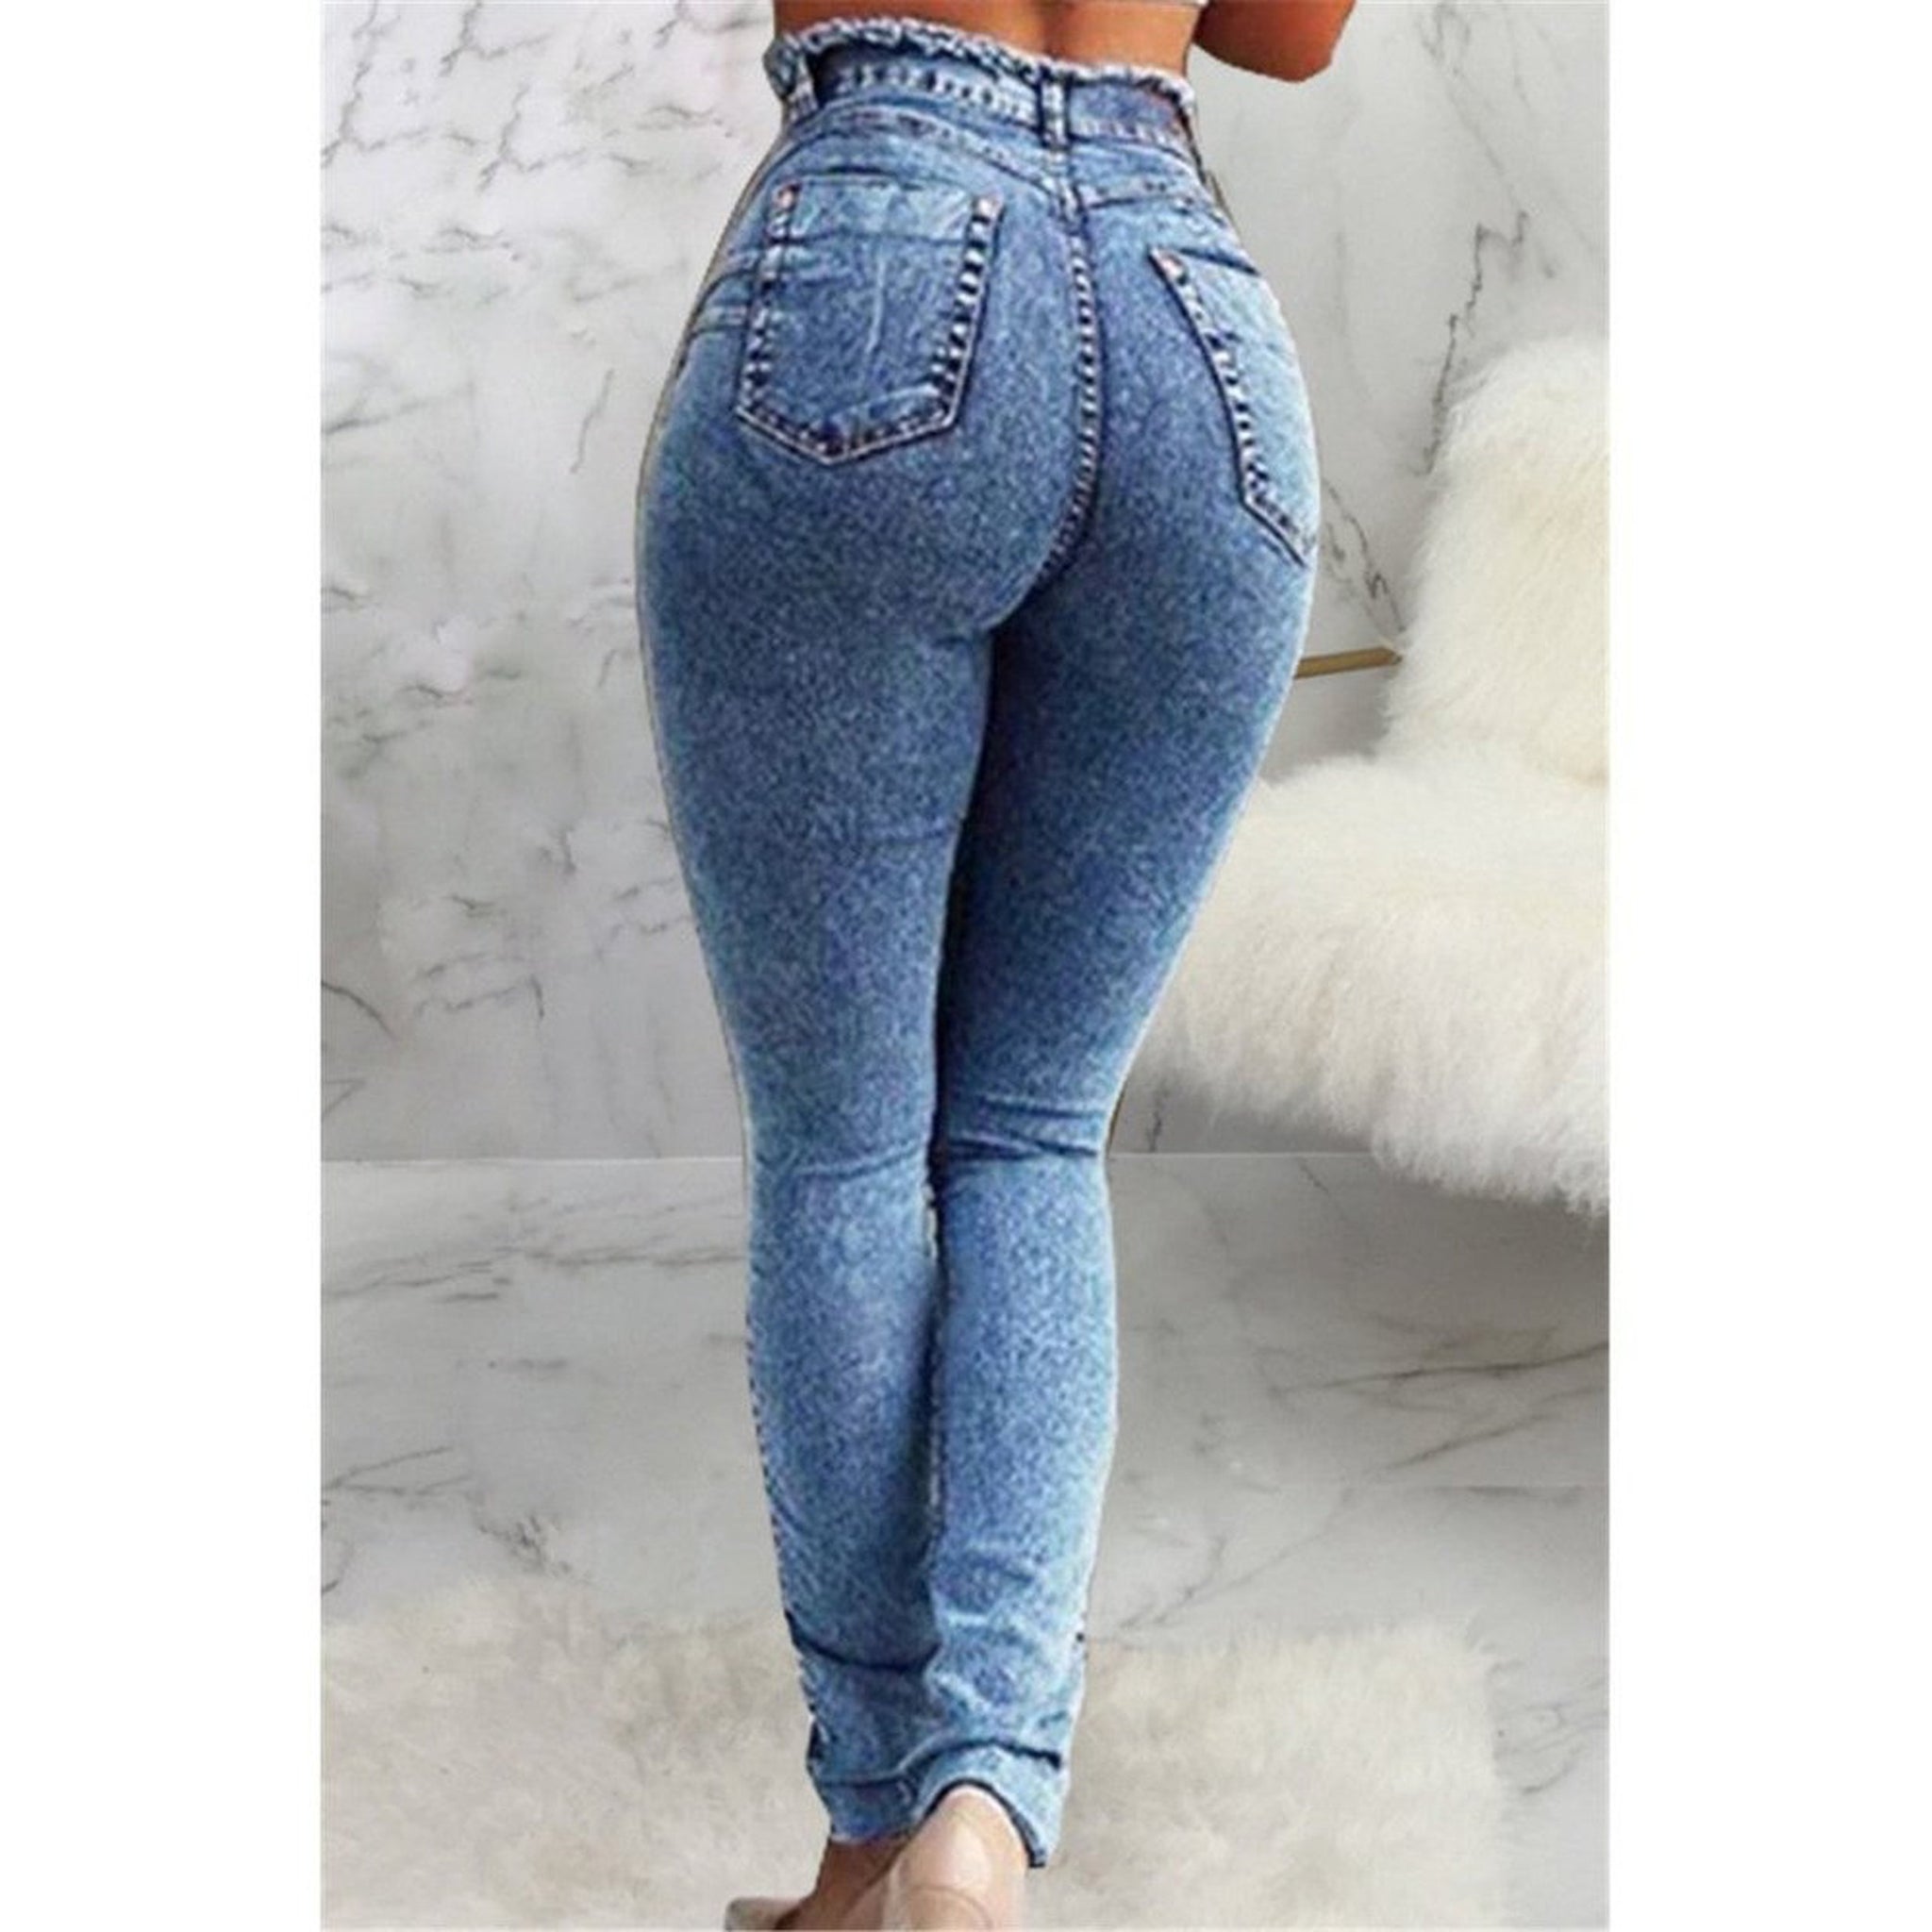 High waist new stylish pocket tight stretch jeans bottoms